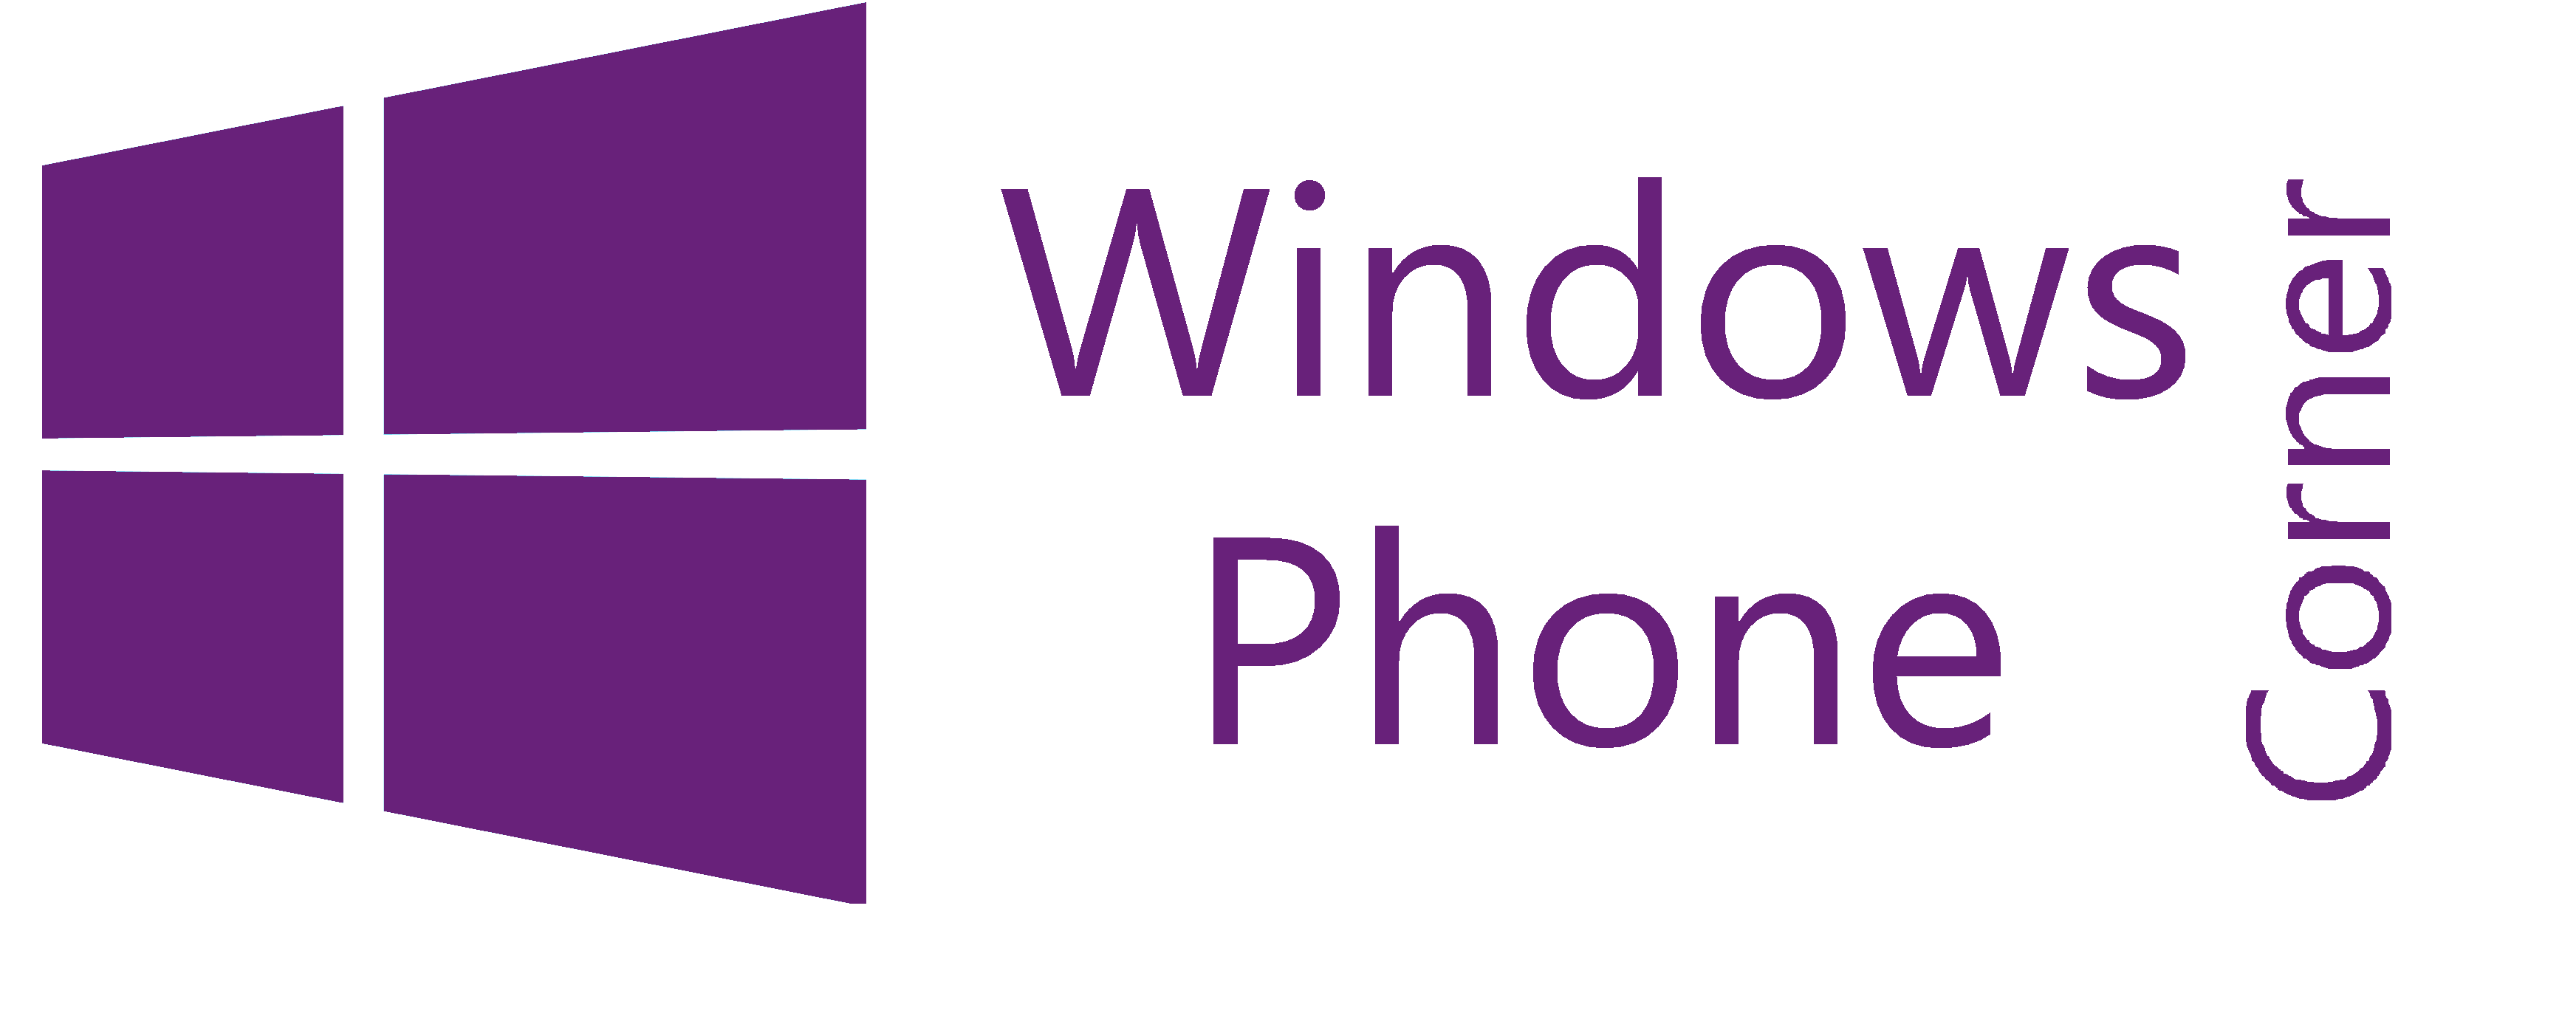 Windows Phone Logo - Windows Phone Corner | Toutes les informations sur Windows Phone